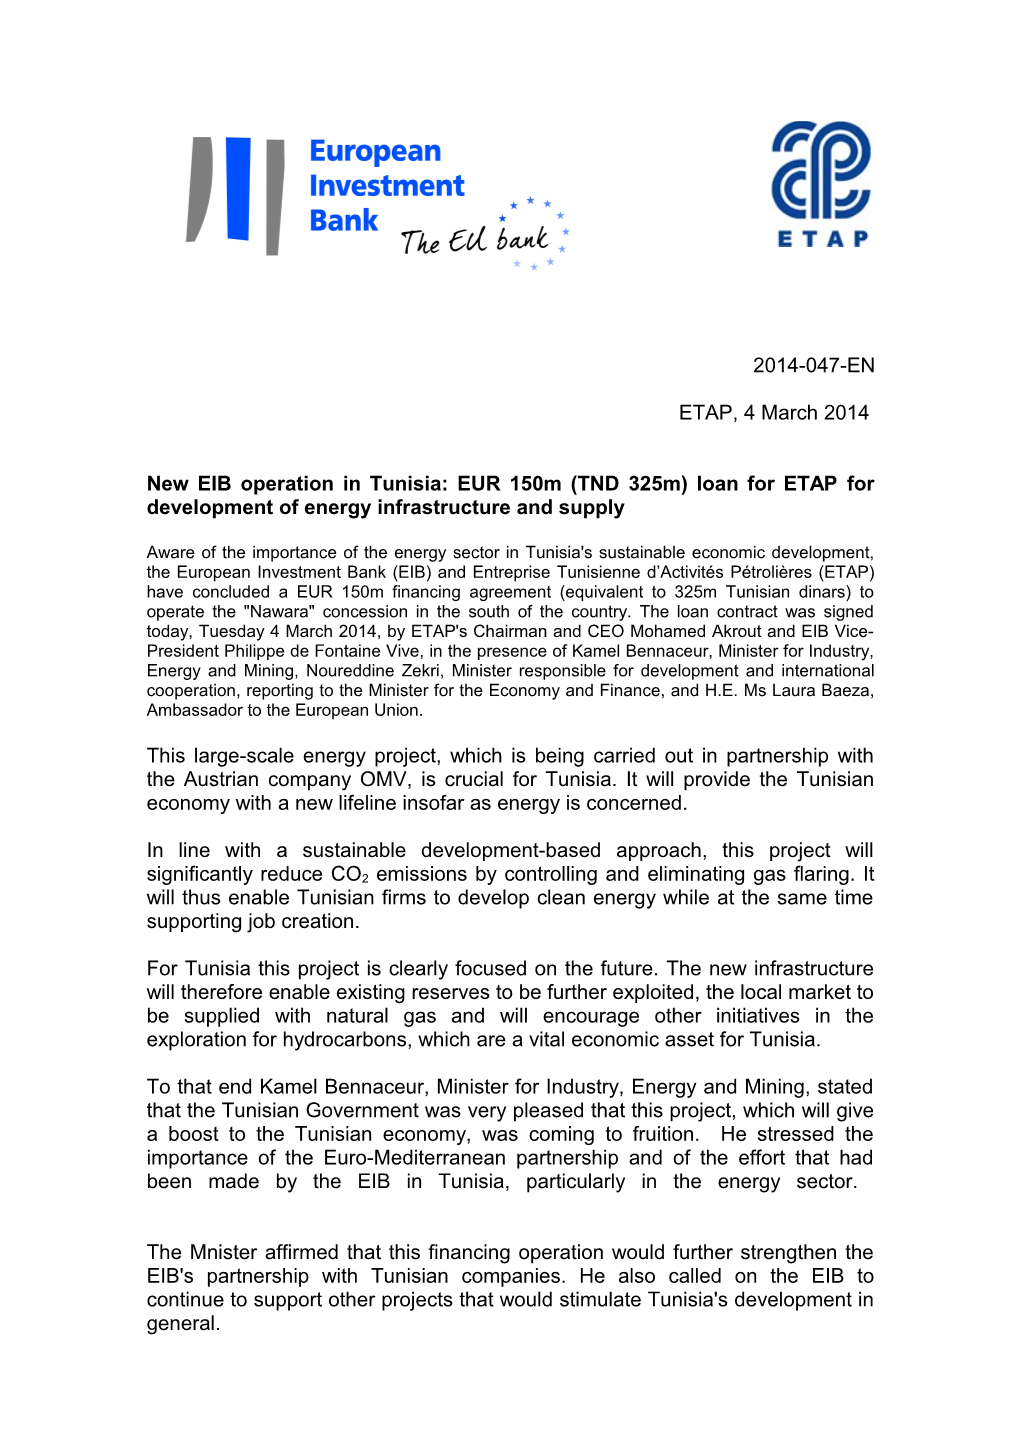 New EIB Operation in Tunisia: EUR 150M (TND 325M) Loan for ETAP for Development of Energy